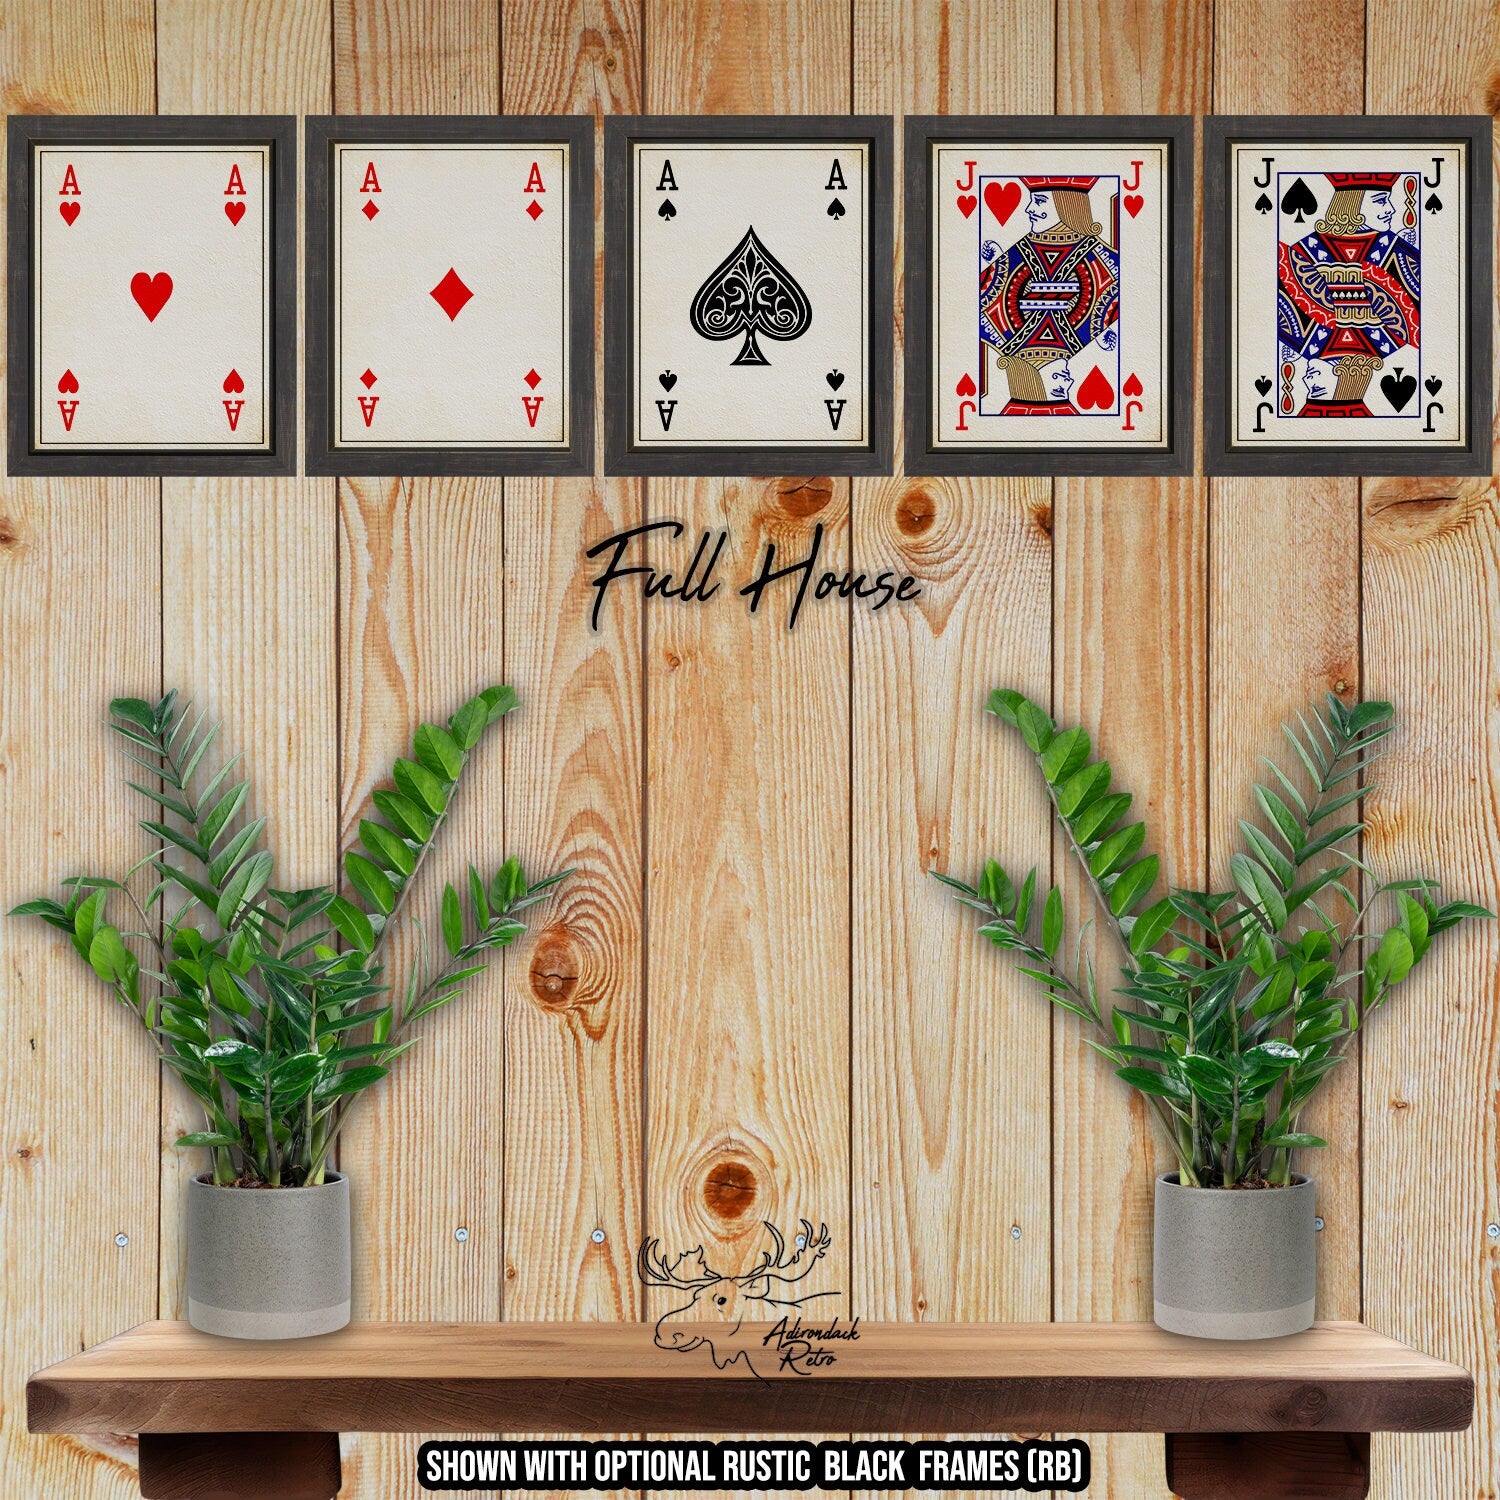 Full House Poker Card Prints - Aces Over Jacks Full House Playing Card Prints at Adirondack Retro